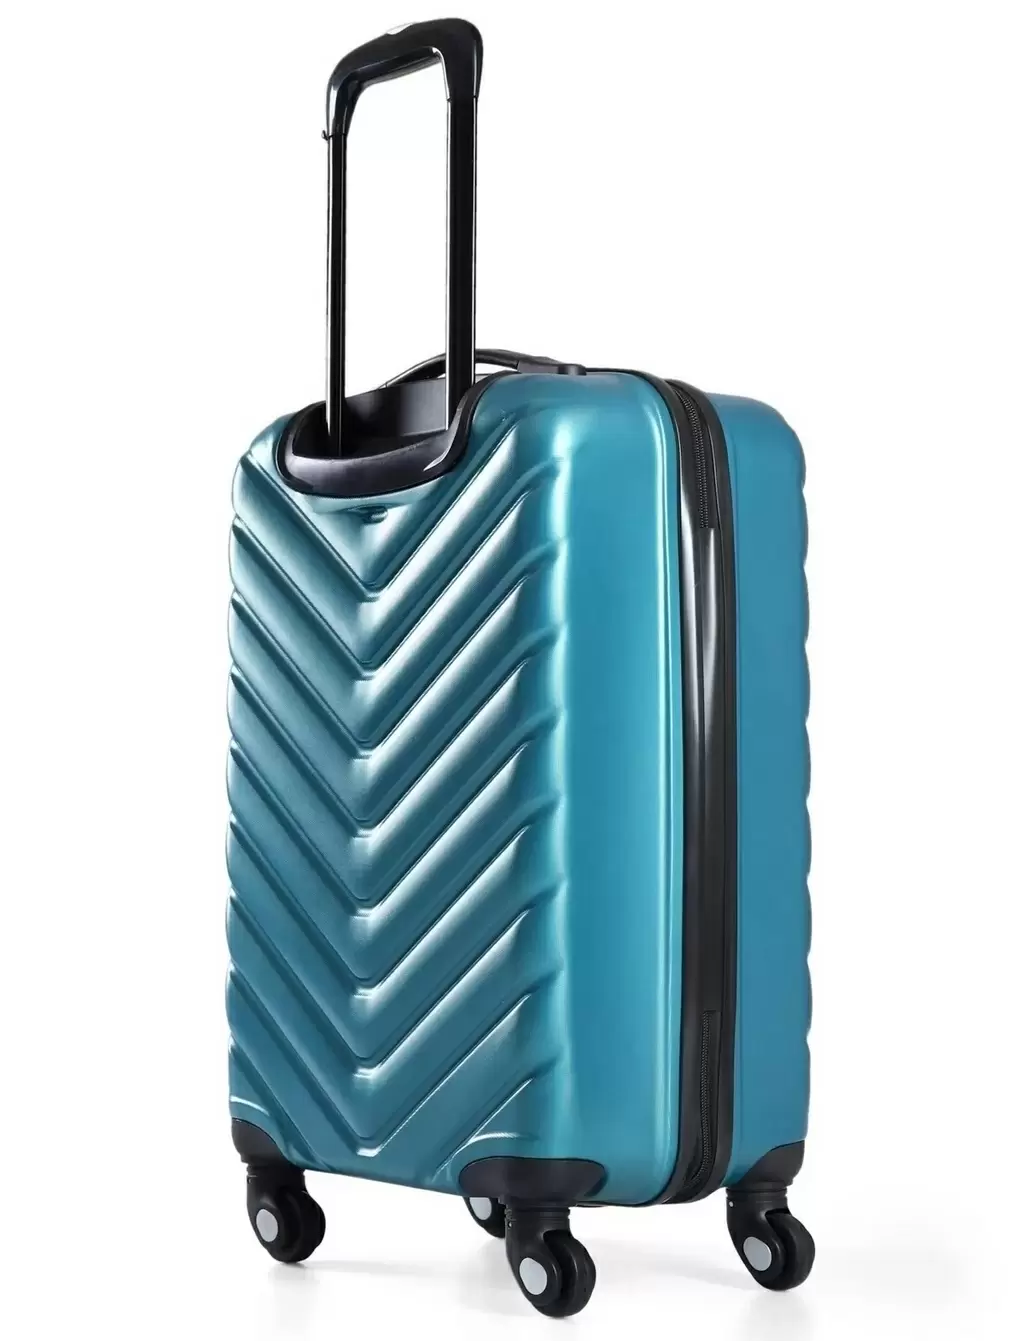 Set de valize CCS 5175 Set, albastru